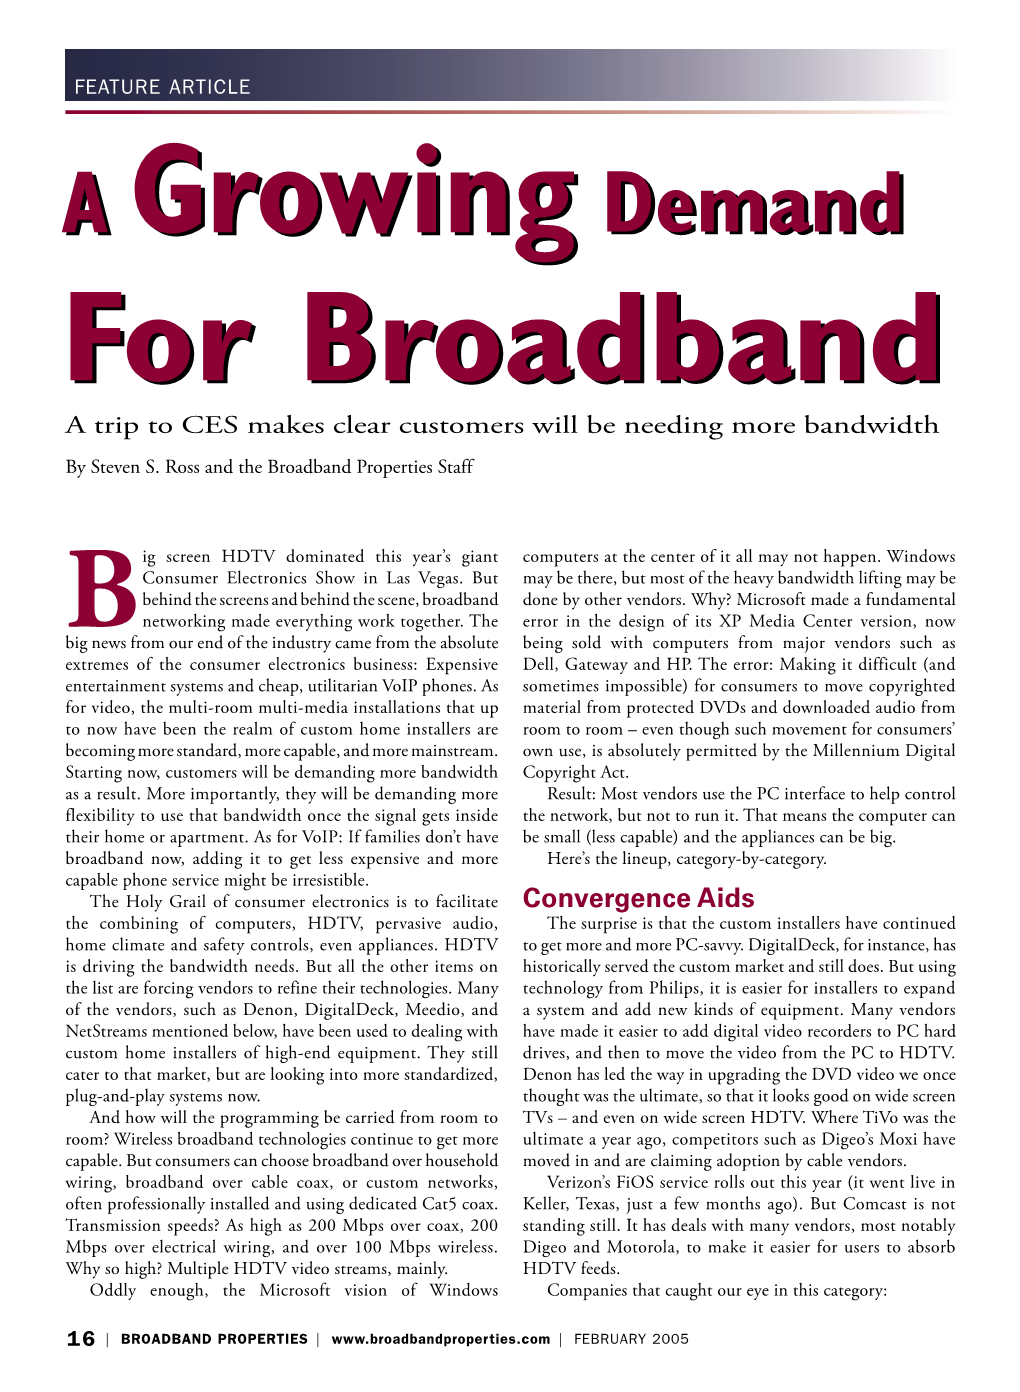 Consumer Electronics Trends and Broadband Demand